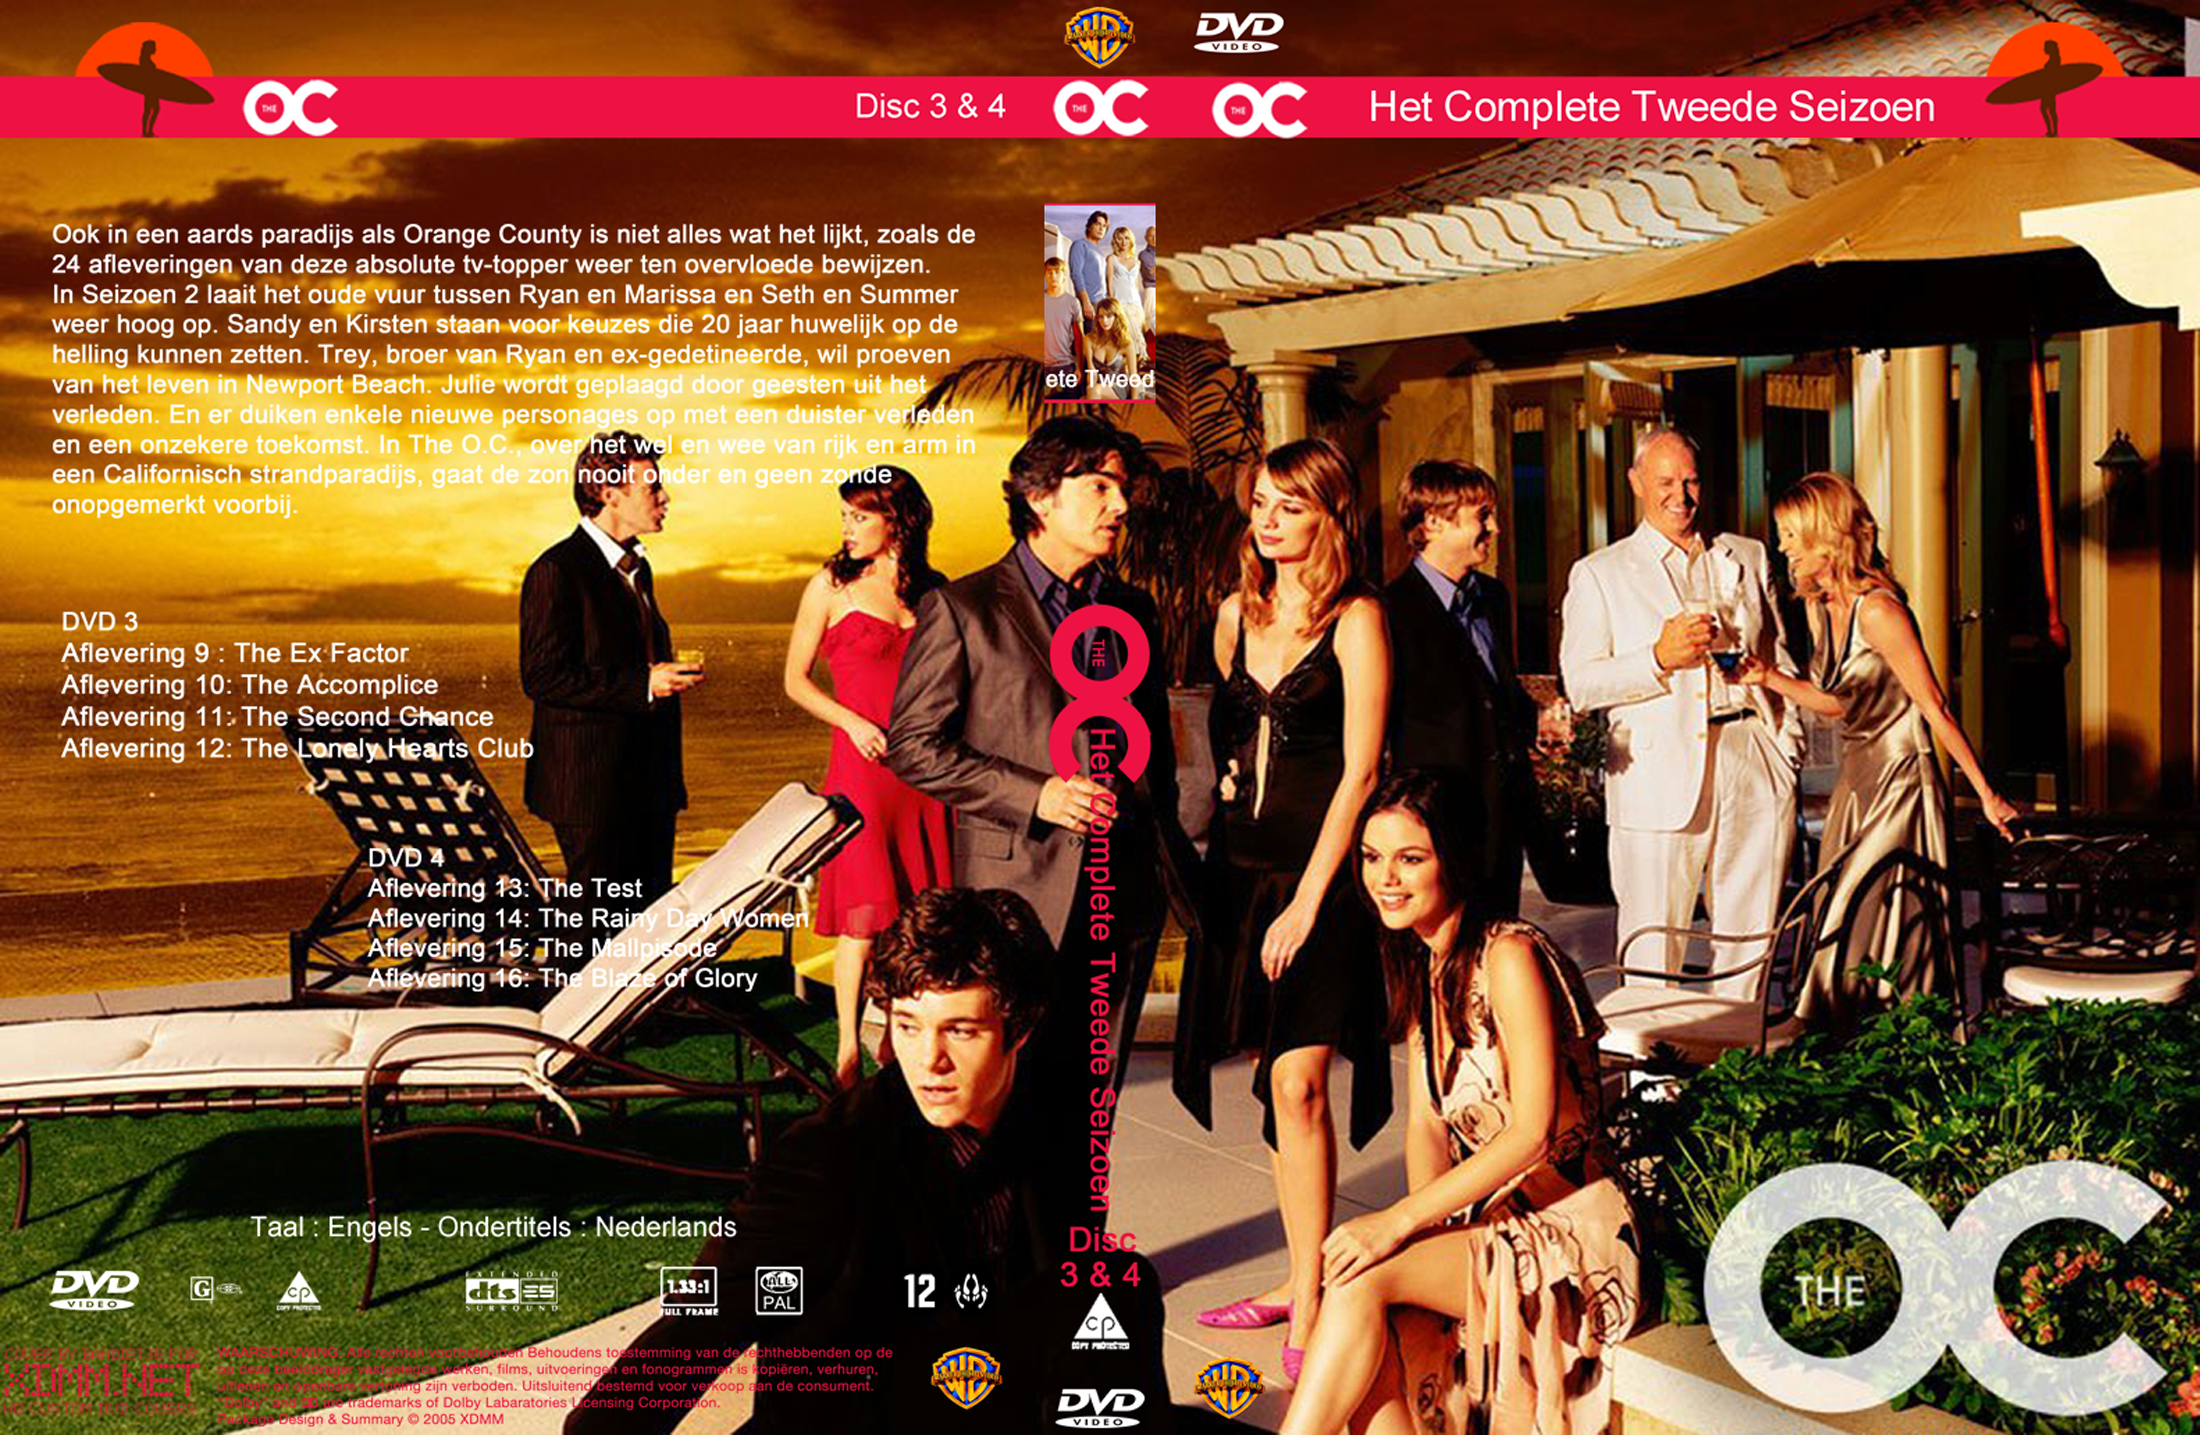 The OC seizoen 2 dvd 3-4